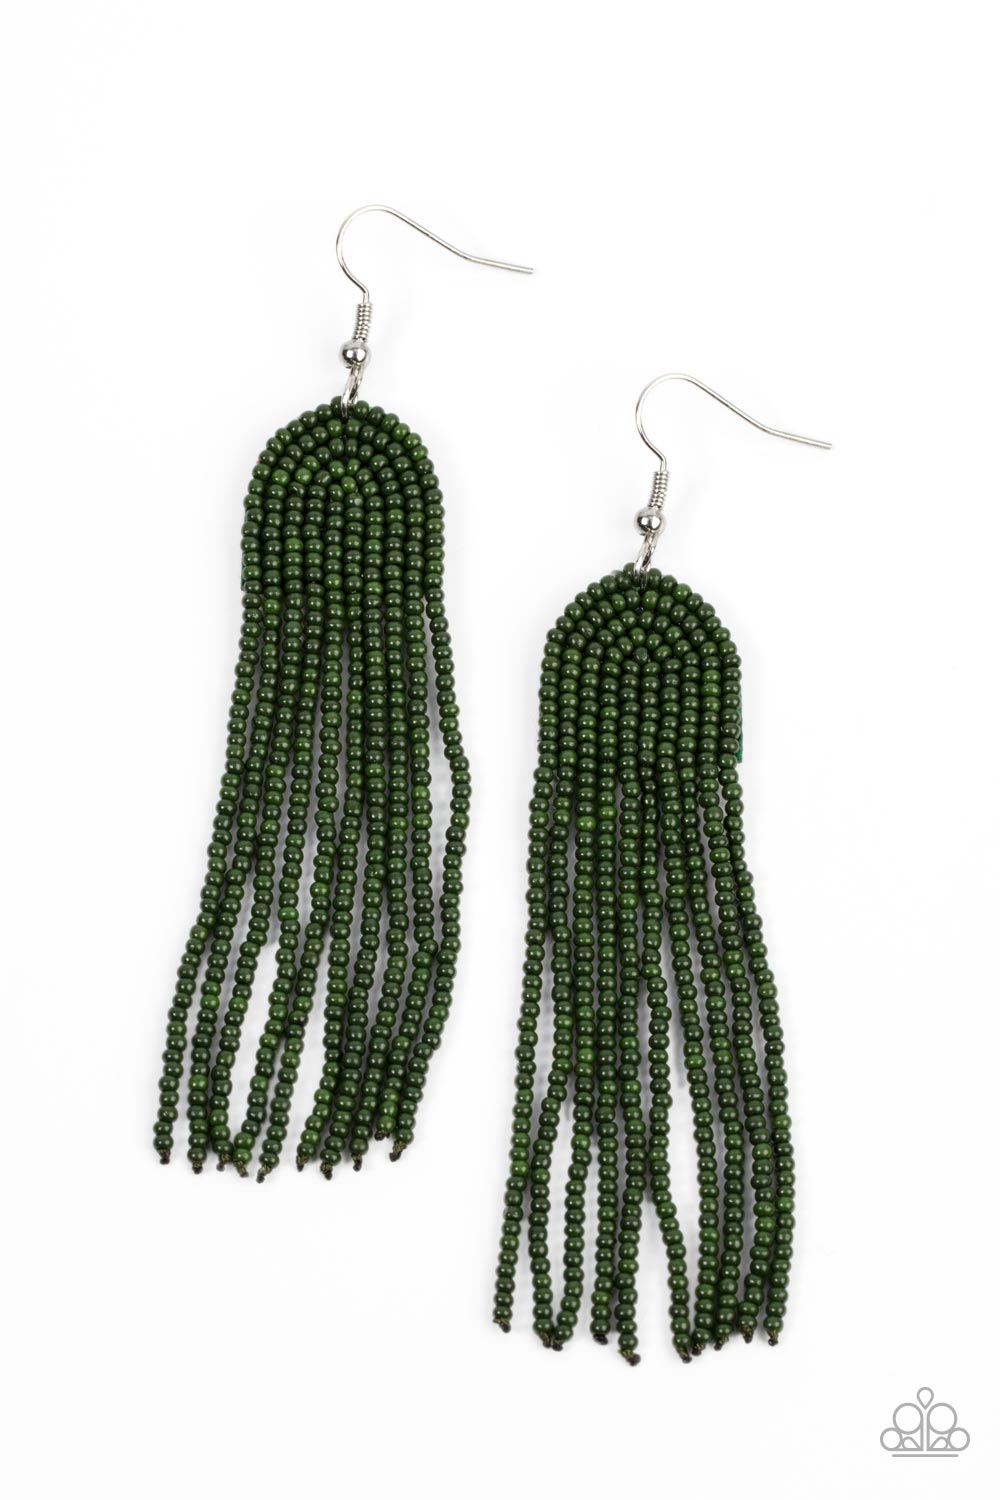 Right as RAINBOW - Green seed bead earrings